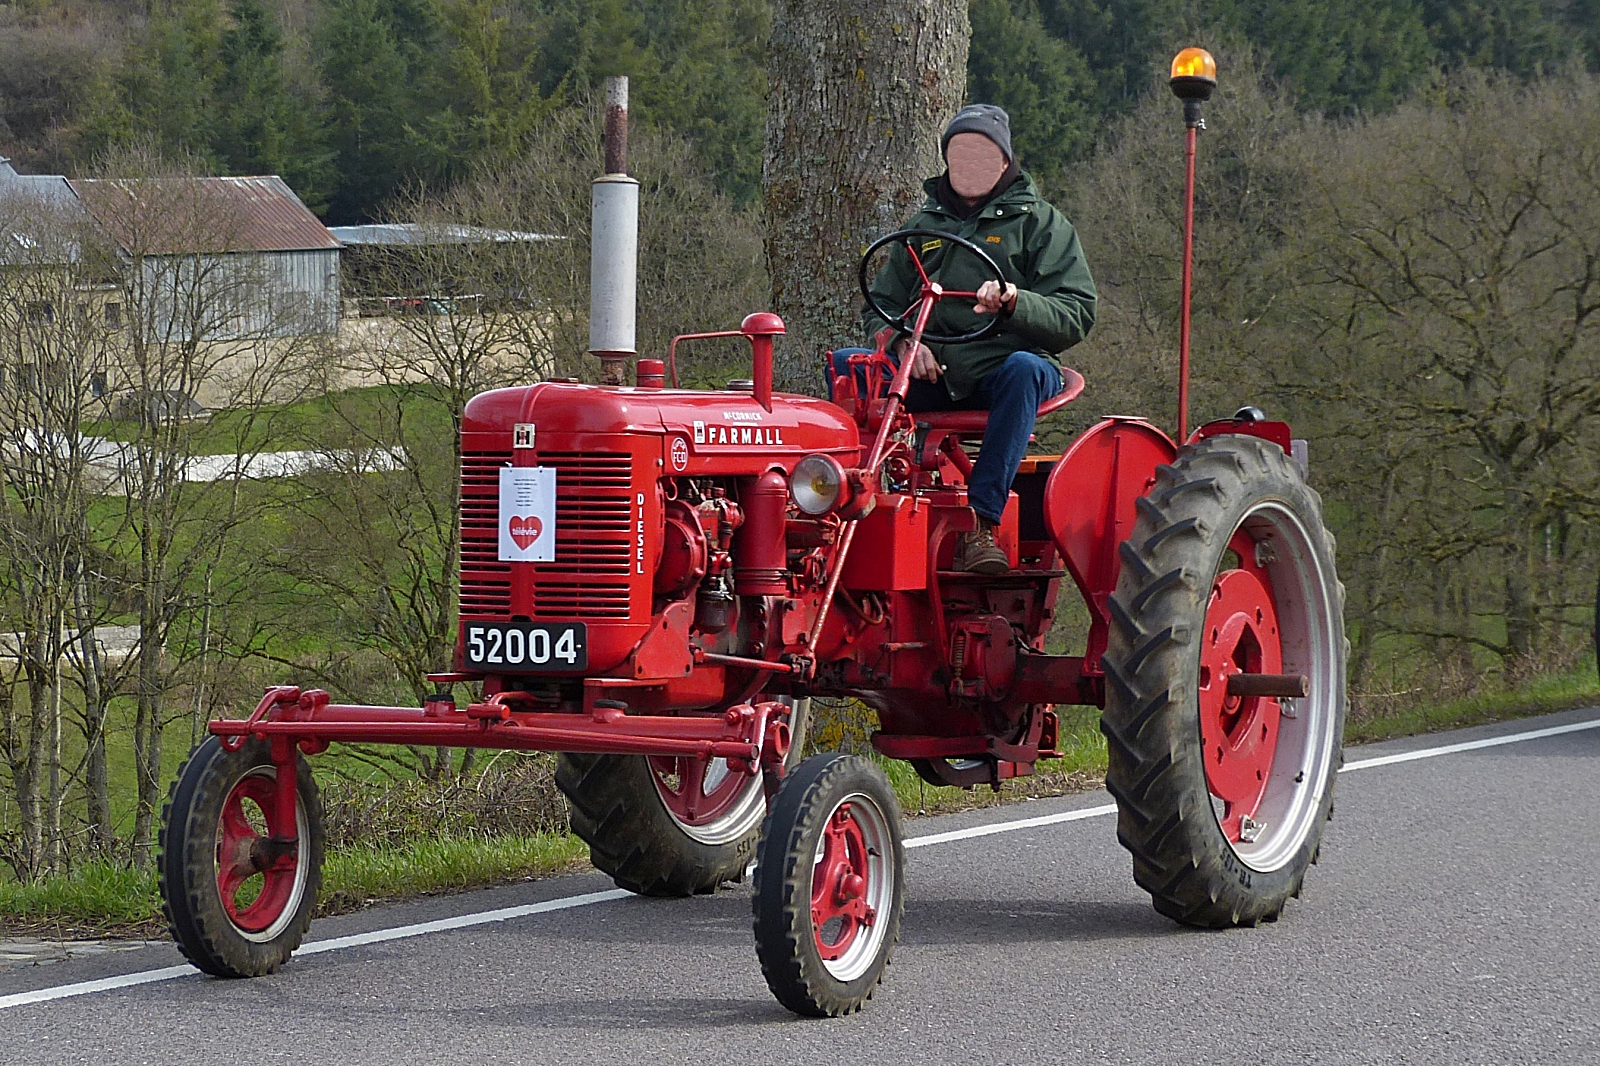 McCormik Farmall Traktor nahm an der Rundfahrt nahe Brachtenbach am Ostermontag teil. 10.04.2023

